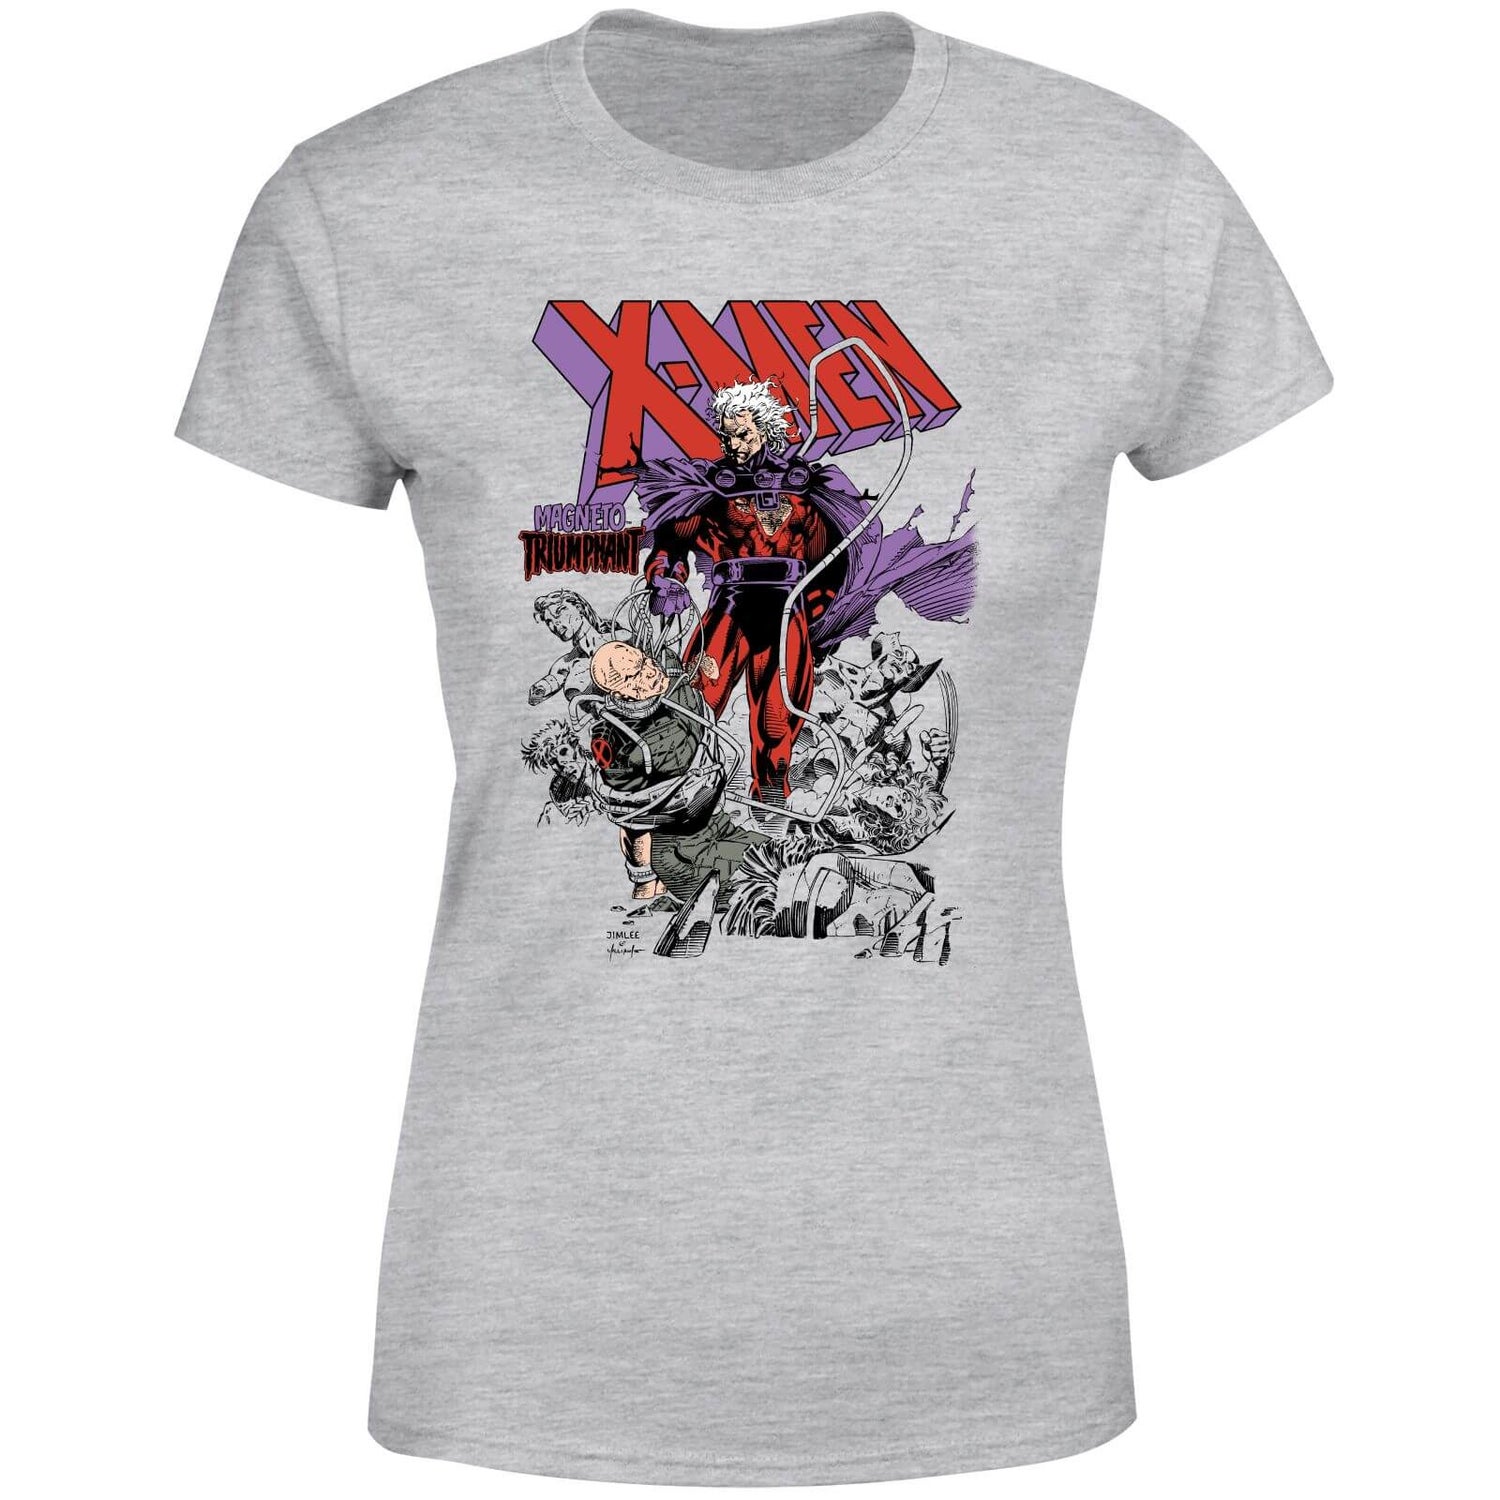 X-Men Magneto Triumphant Women's T-Shirt - Grey